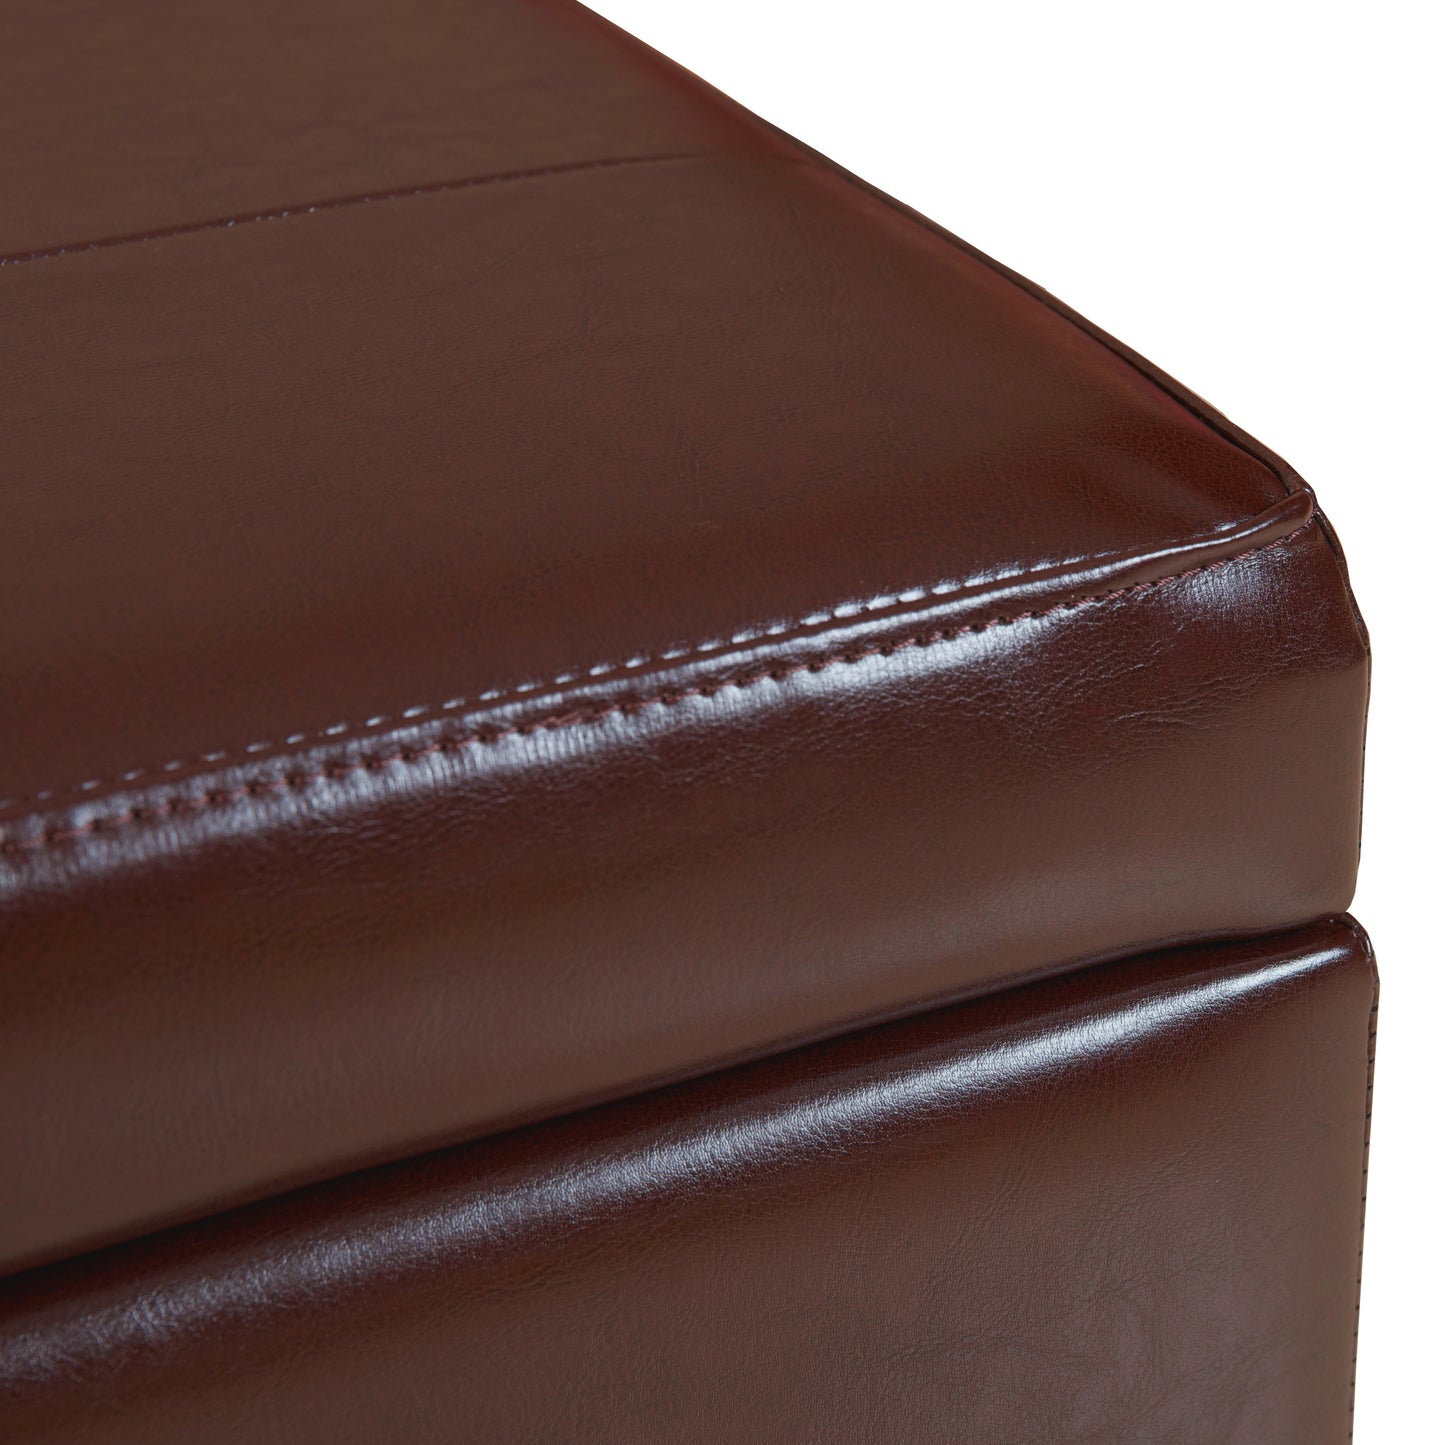 Charleston Rectangle Tufted Leather Storage Ottoman Bench